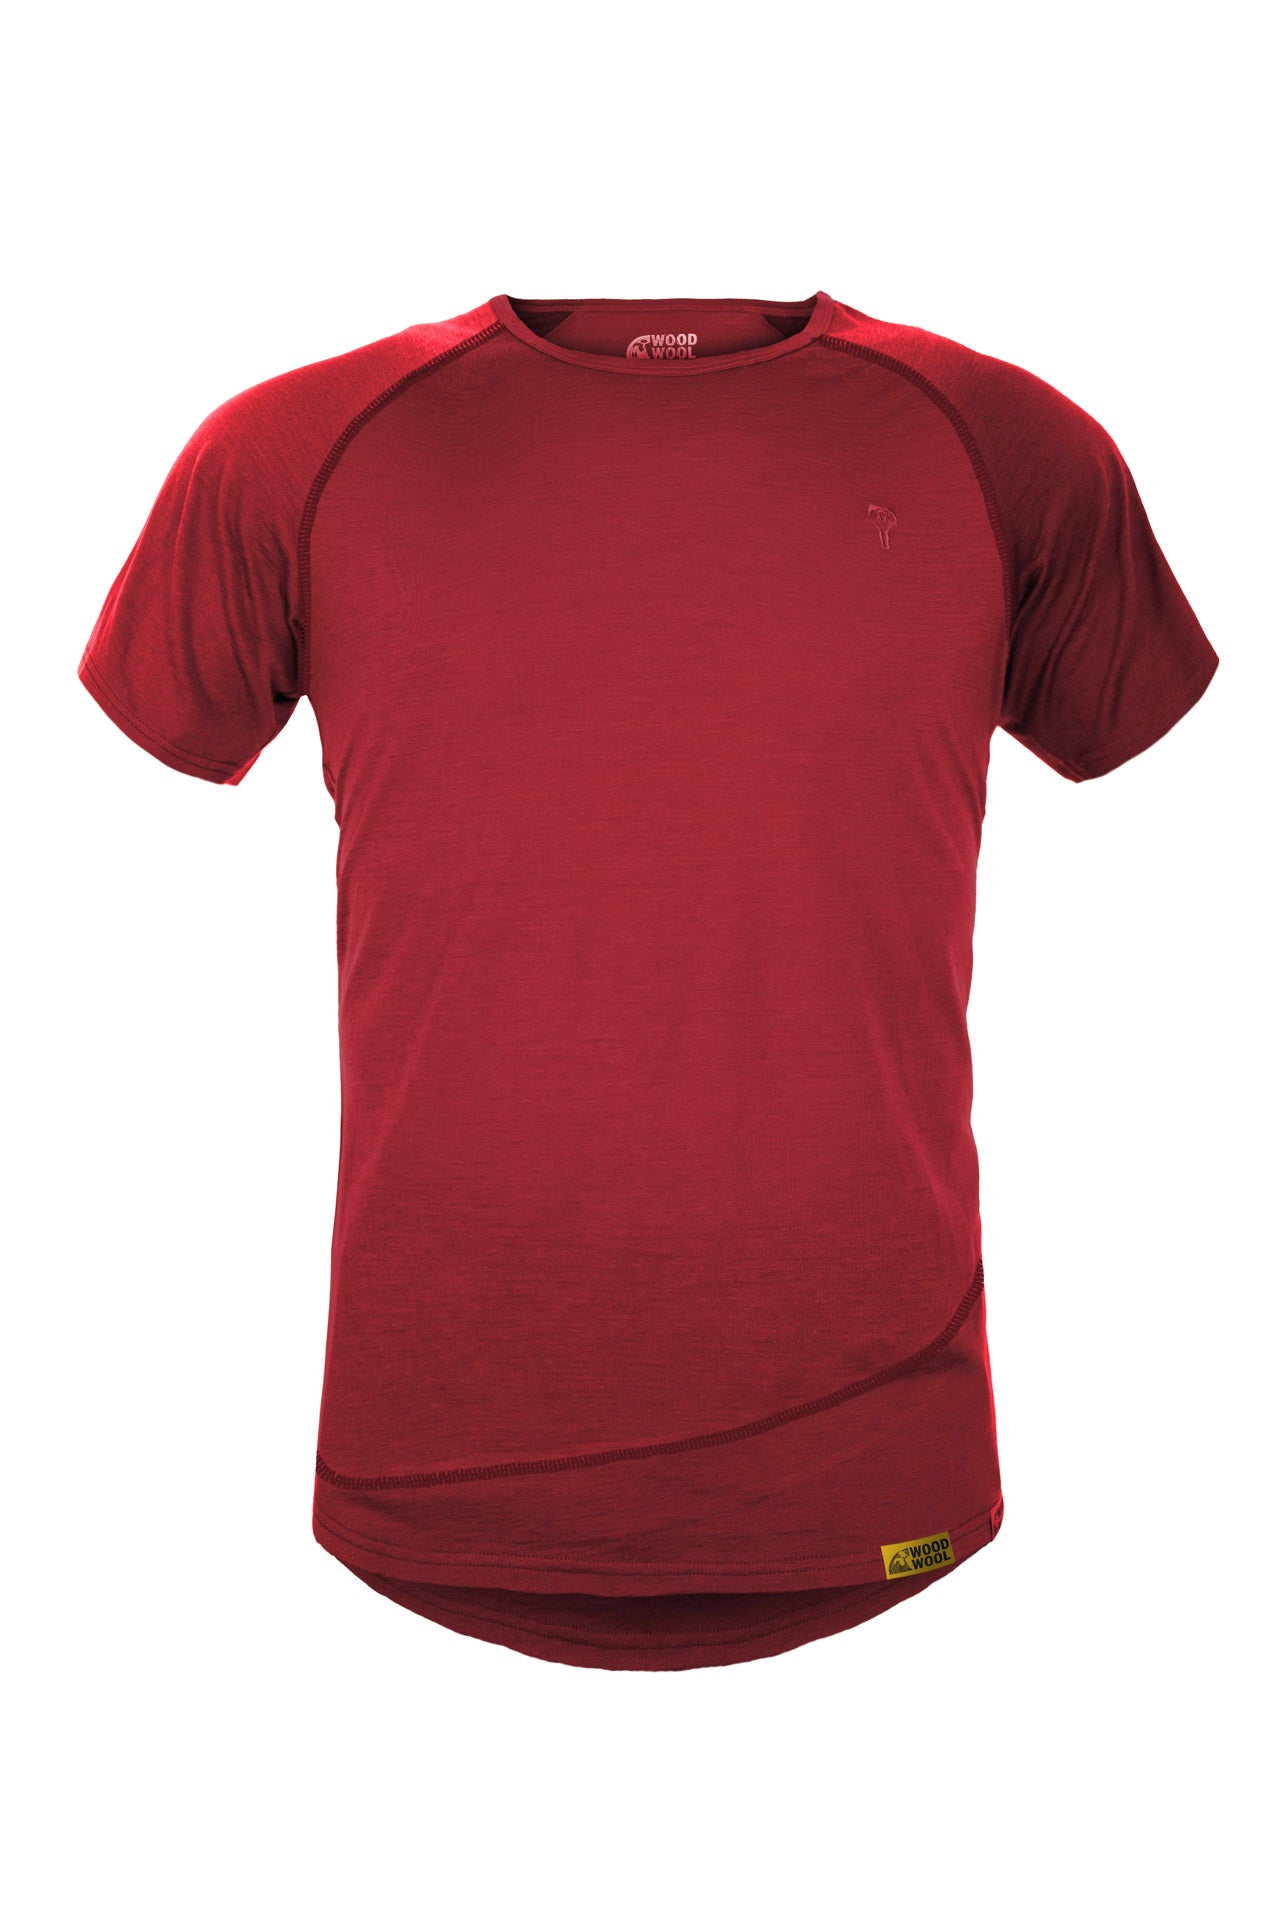 WoodWool T-Shirt Mr. Pike - Fired Red Brick